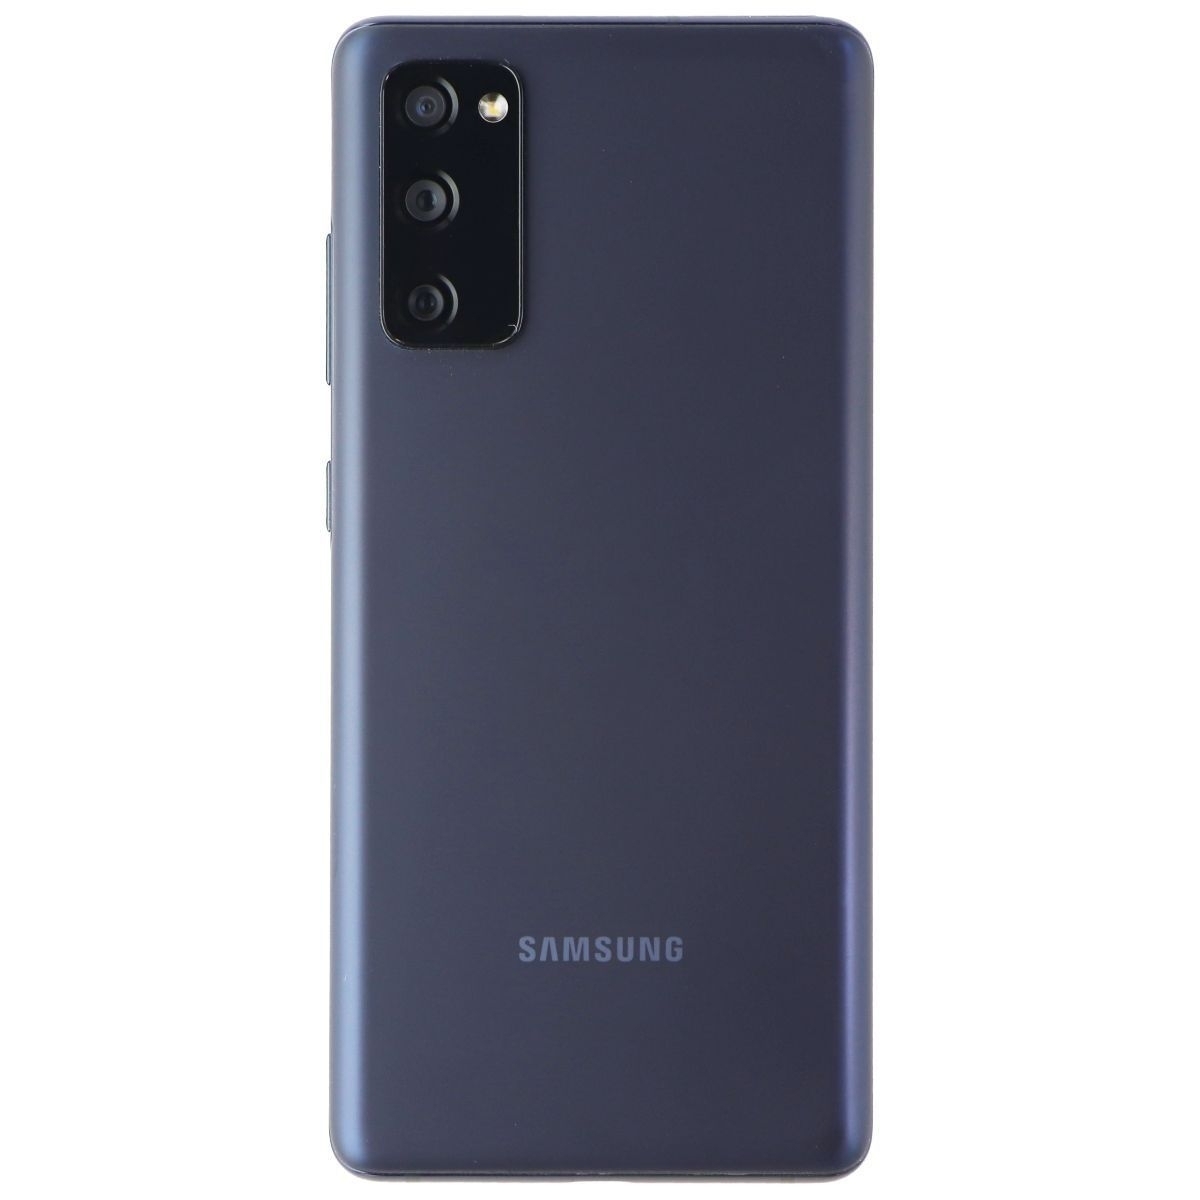 FAIR Samsung Galaxy S20 FE 5G UW (6.5-in) (SM-G781V) Verizon Only - 128GB/Navy